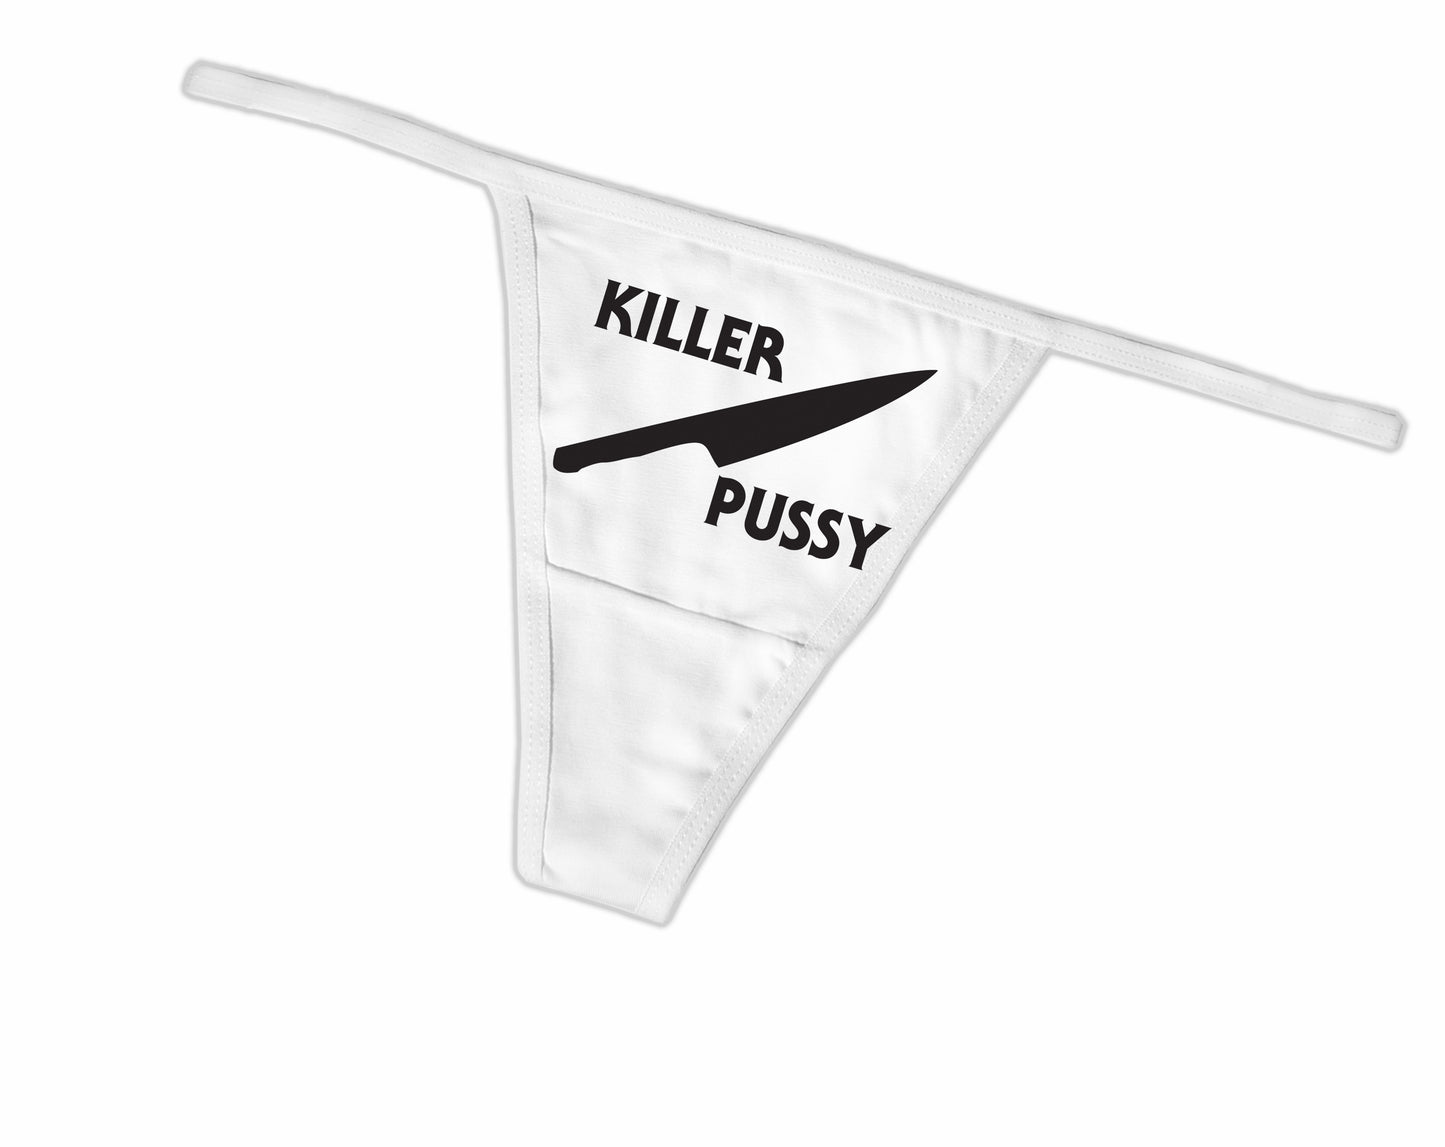 Killer Pussy Thong